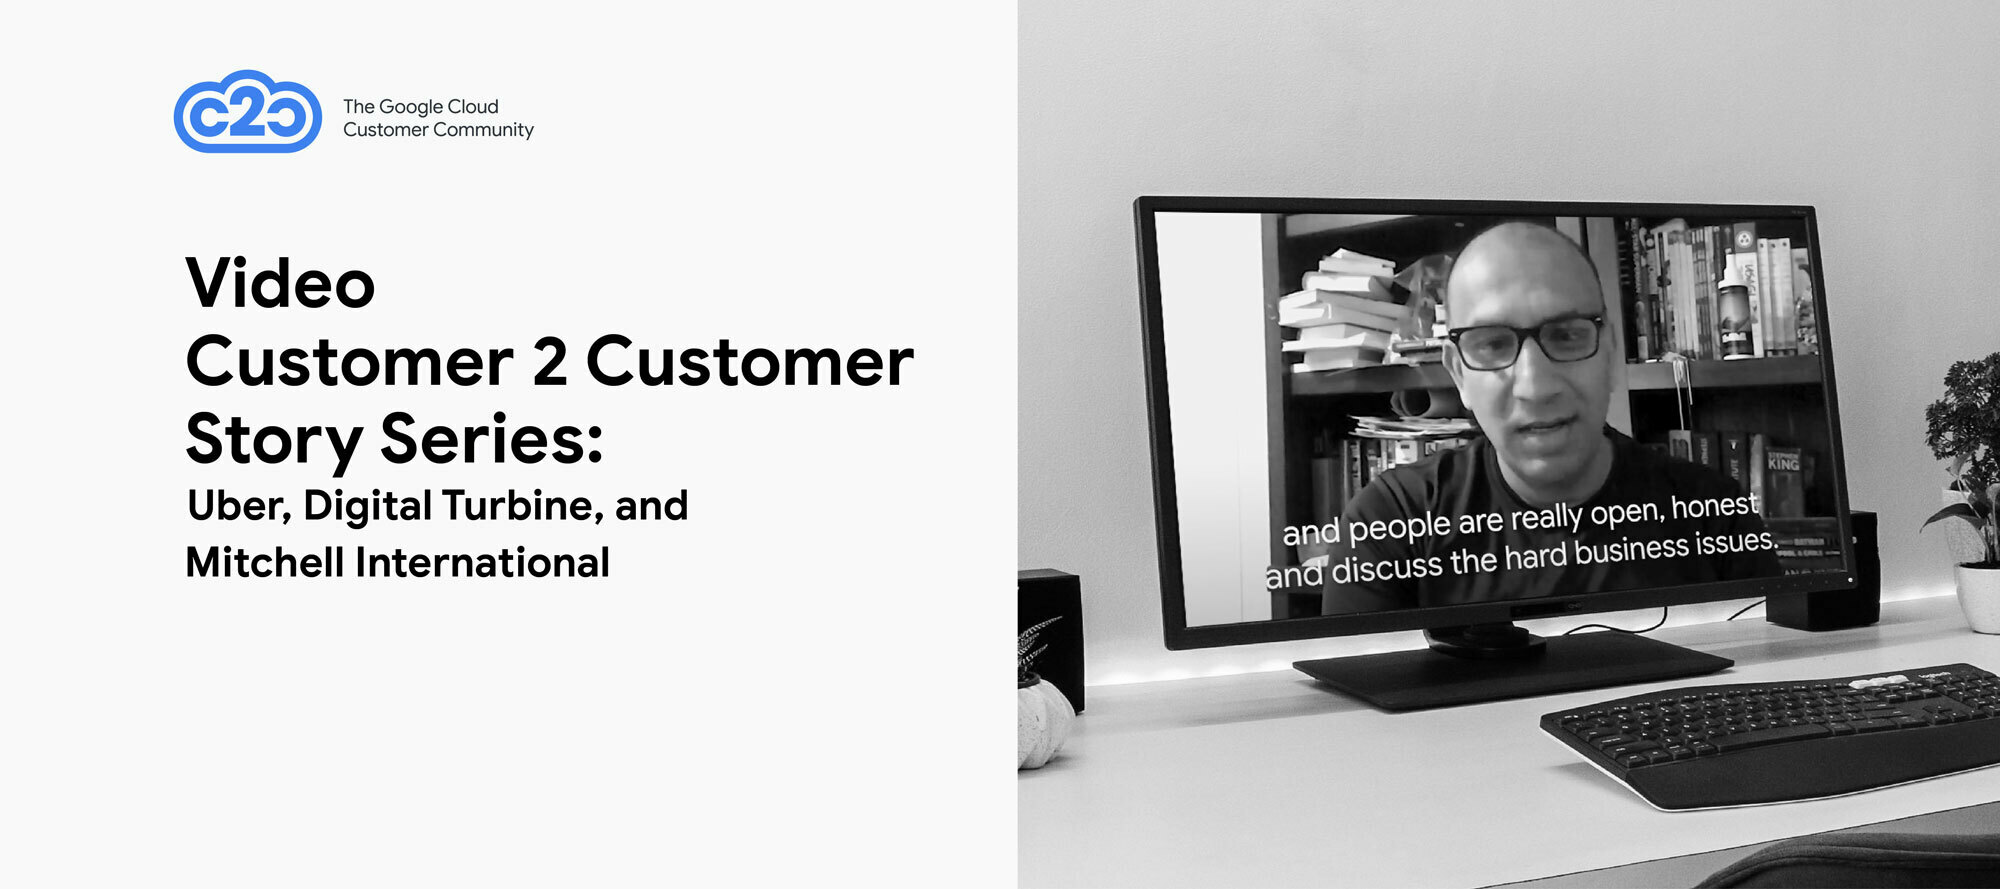 Video Customer 2 Customer Story Series: Uber, Digital Turbine, and Mitchell International